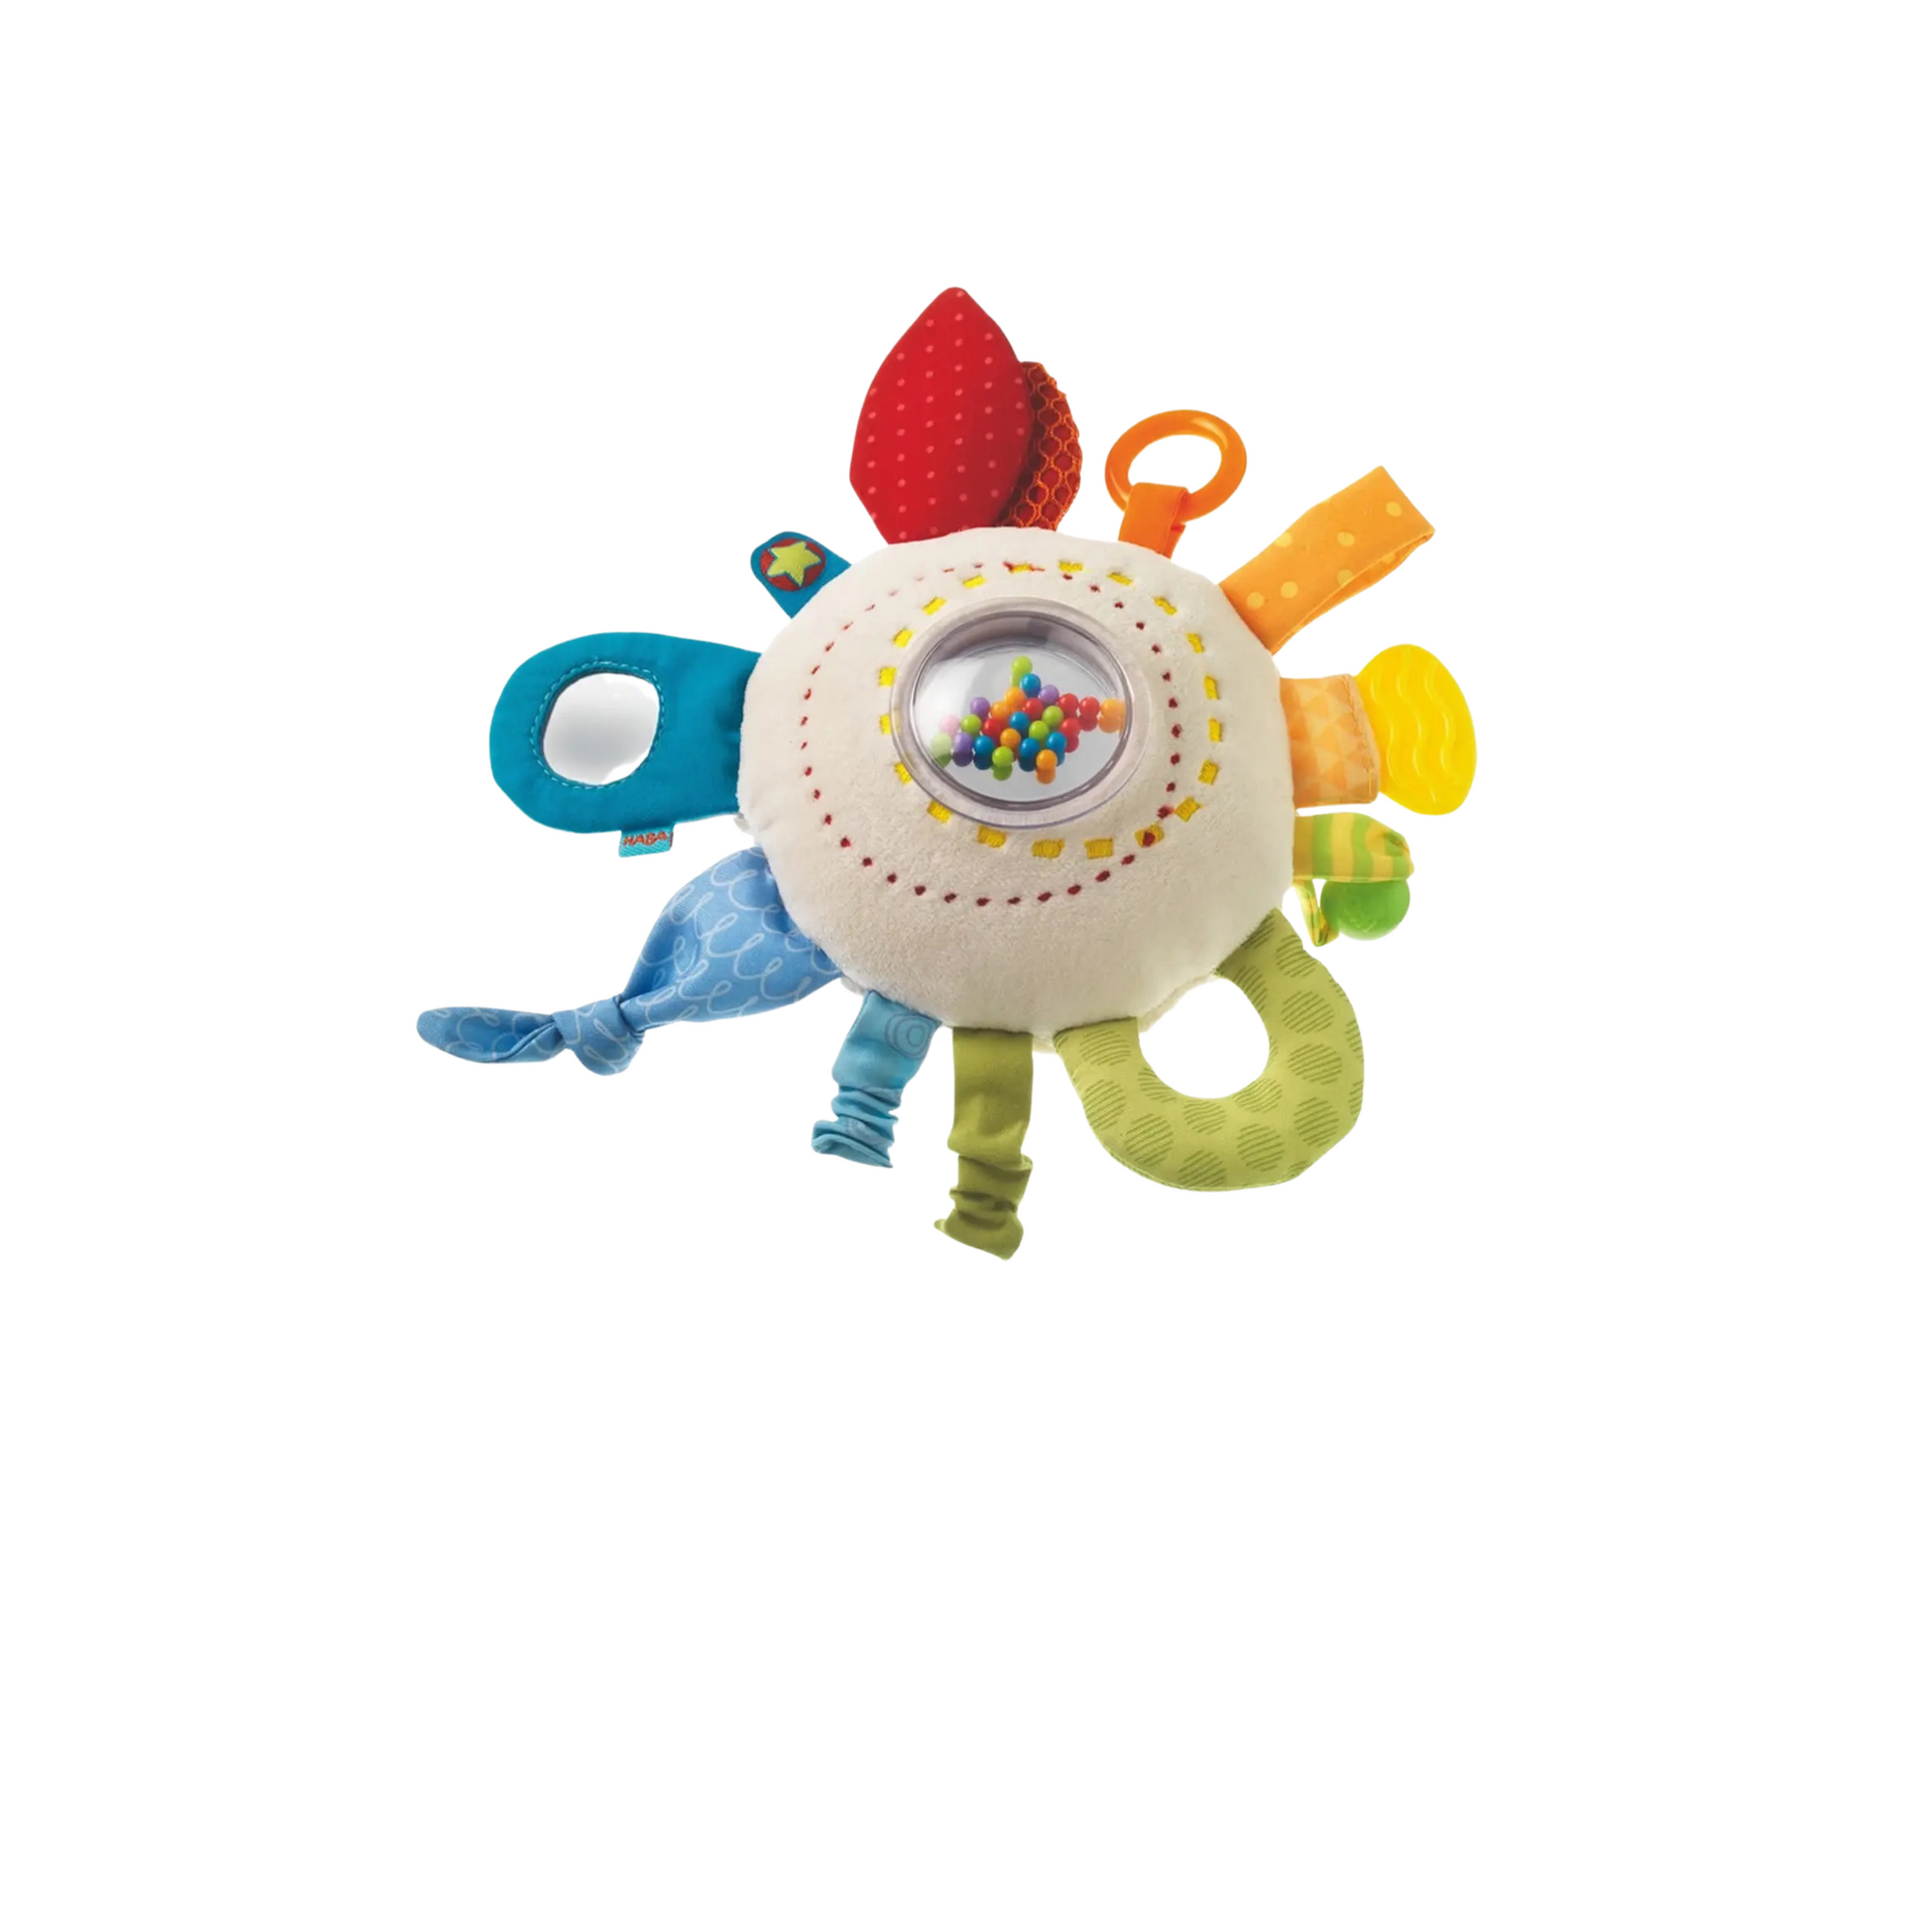 Cuddly Rainbow Activity Teether Toy